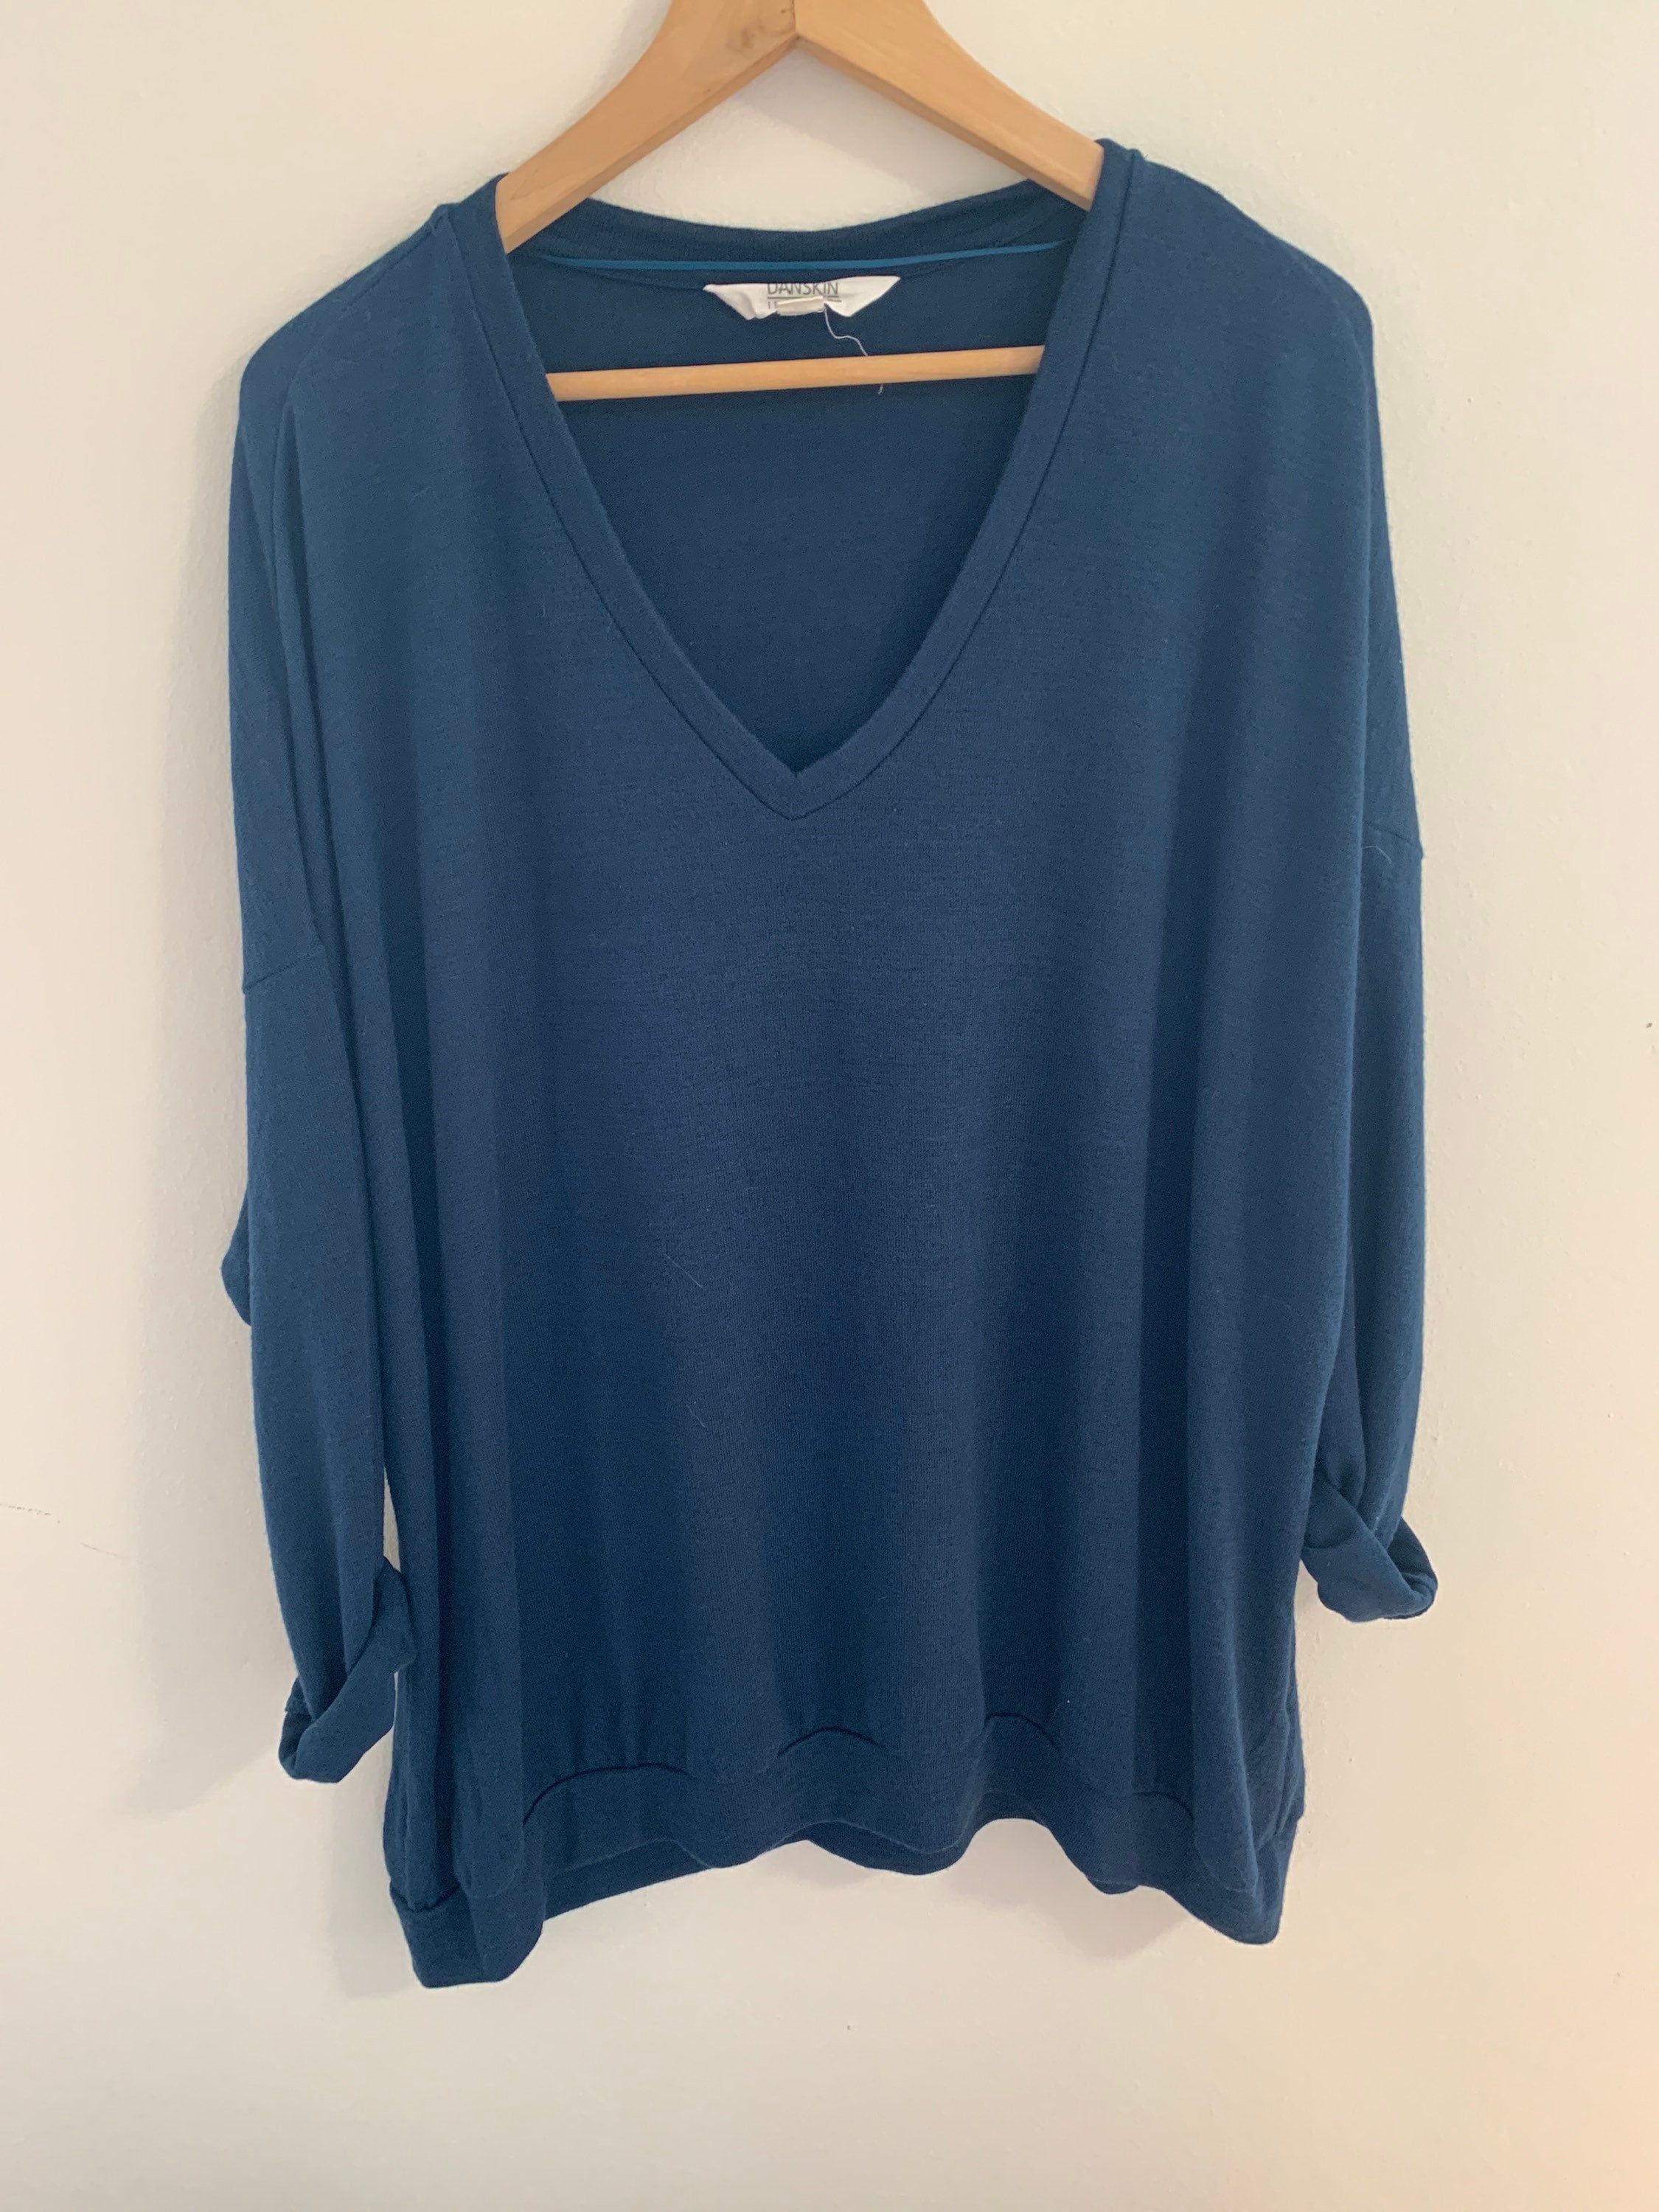 DANSKIN Knit Top Oversized Navy Blue Pullover Soft Rayon Blend